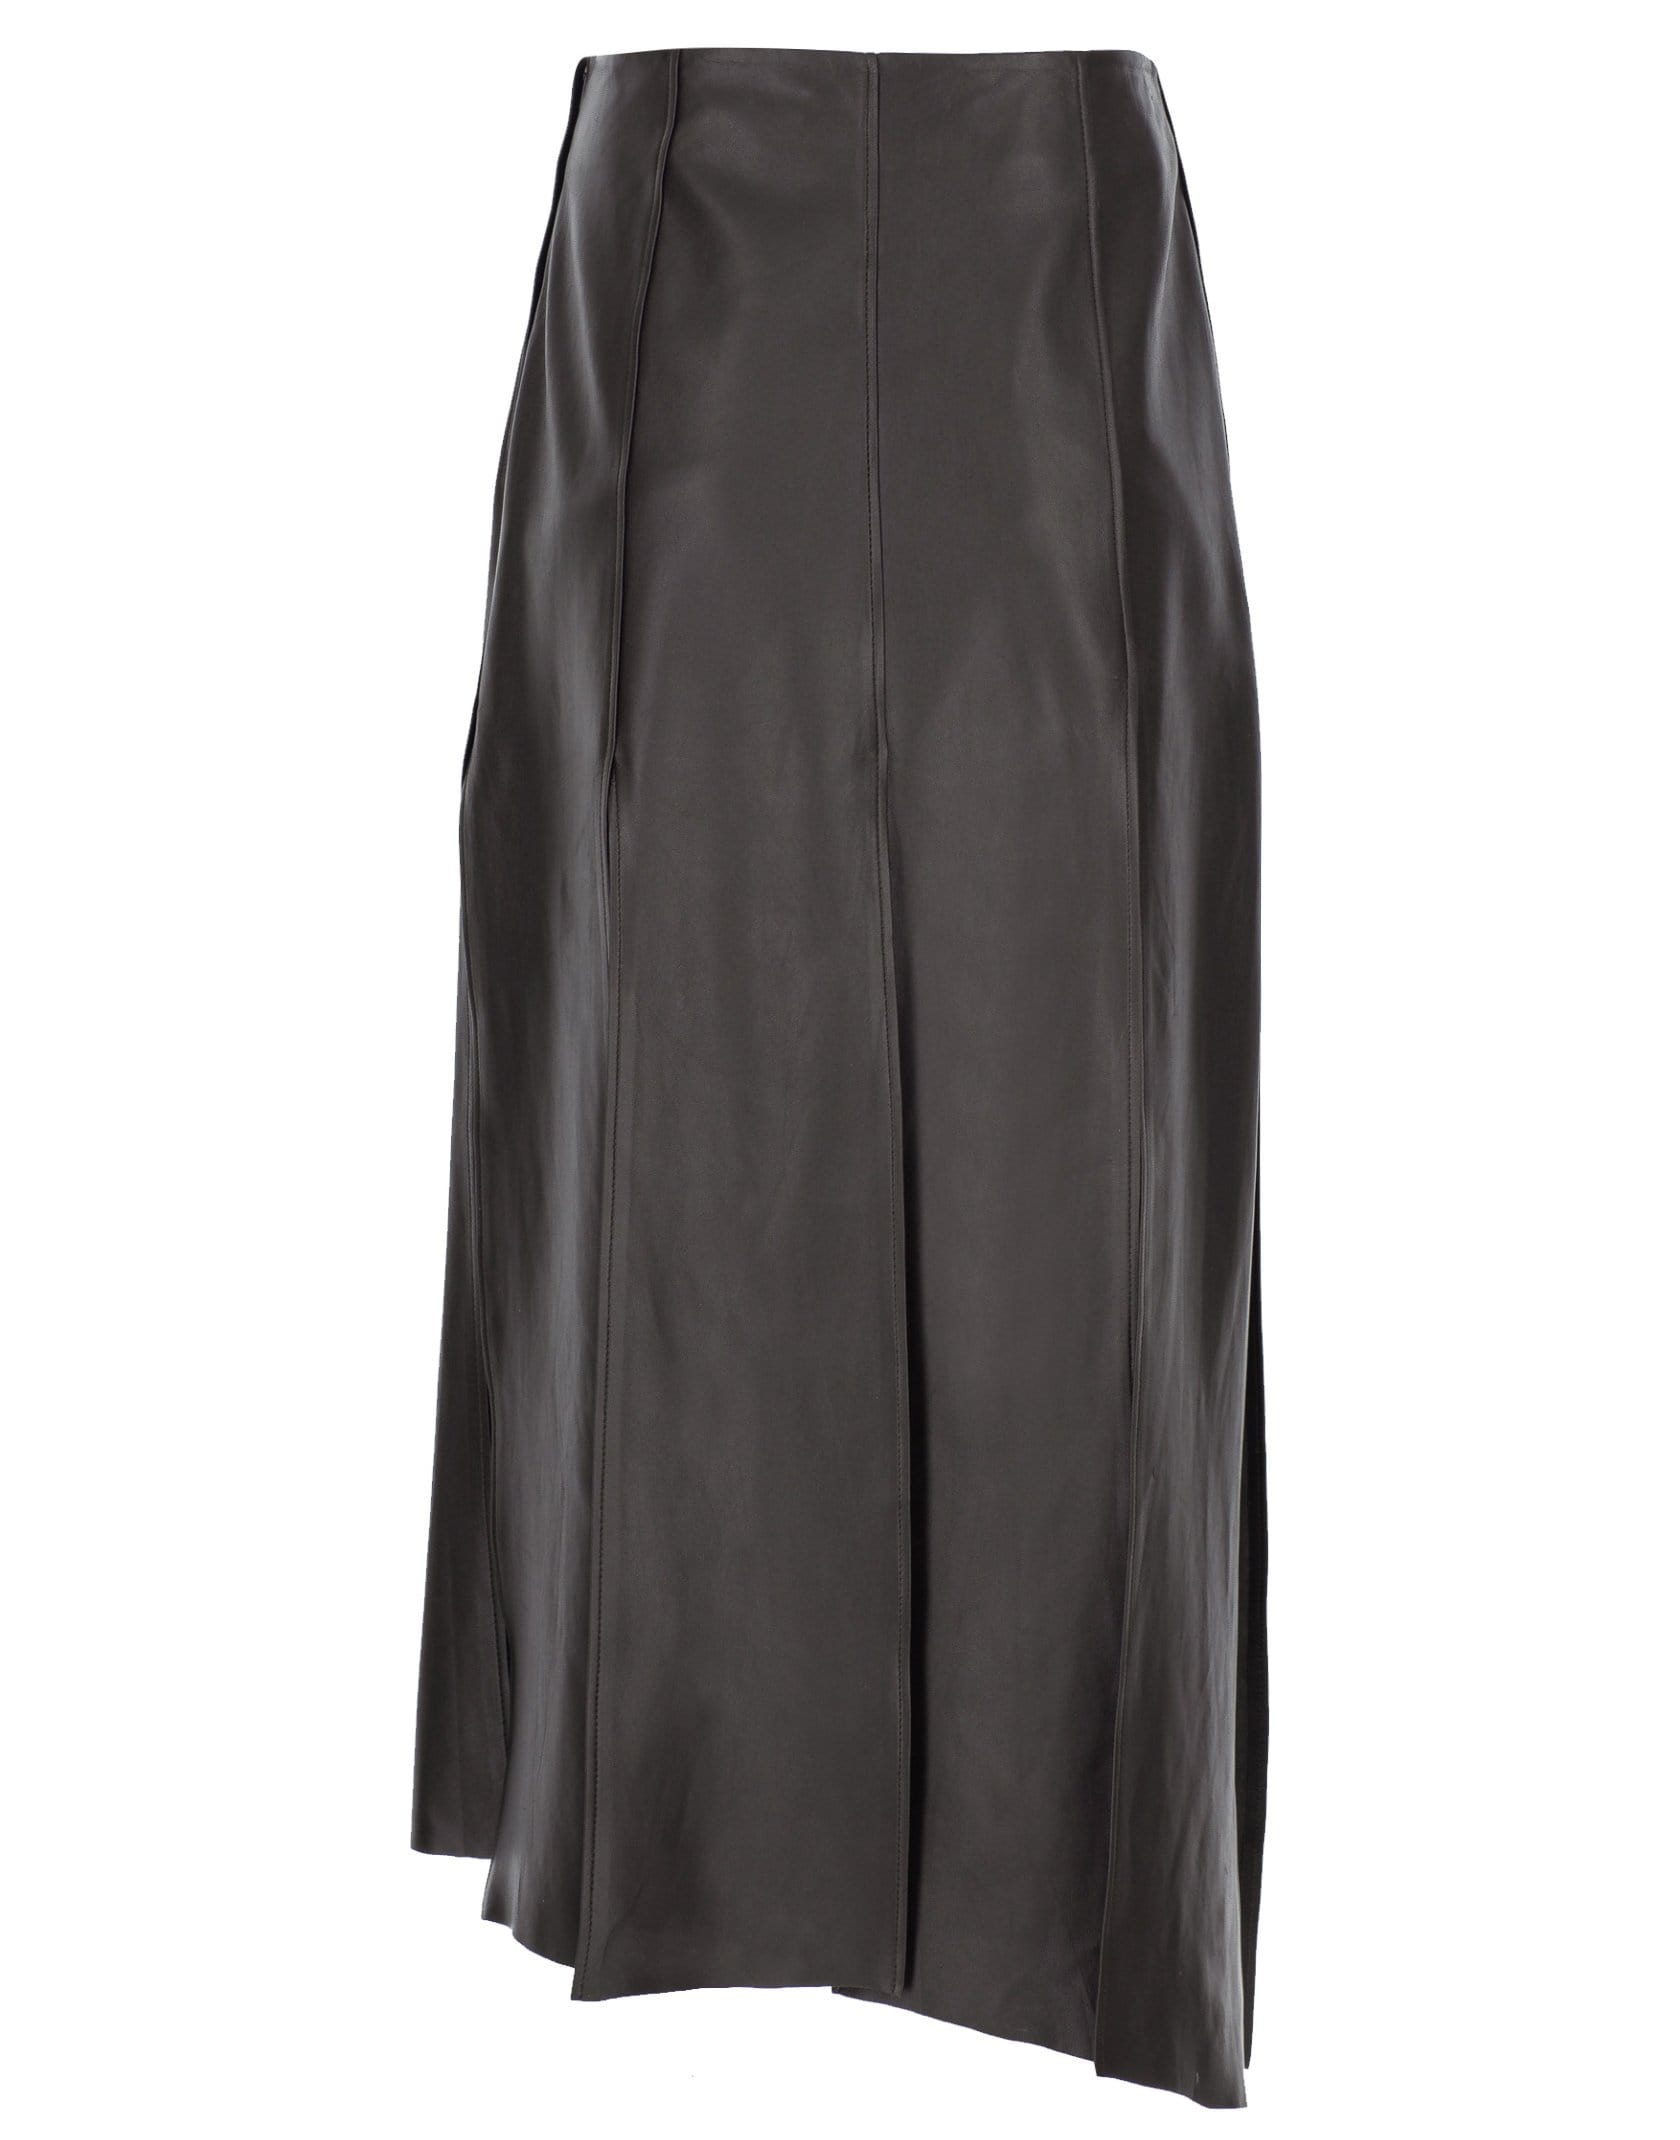 ZEYNEP ARCAY-Black Eight Slit Leather Skirt-